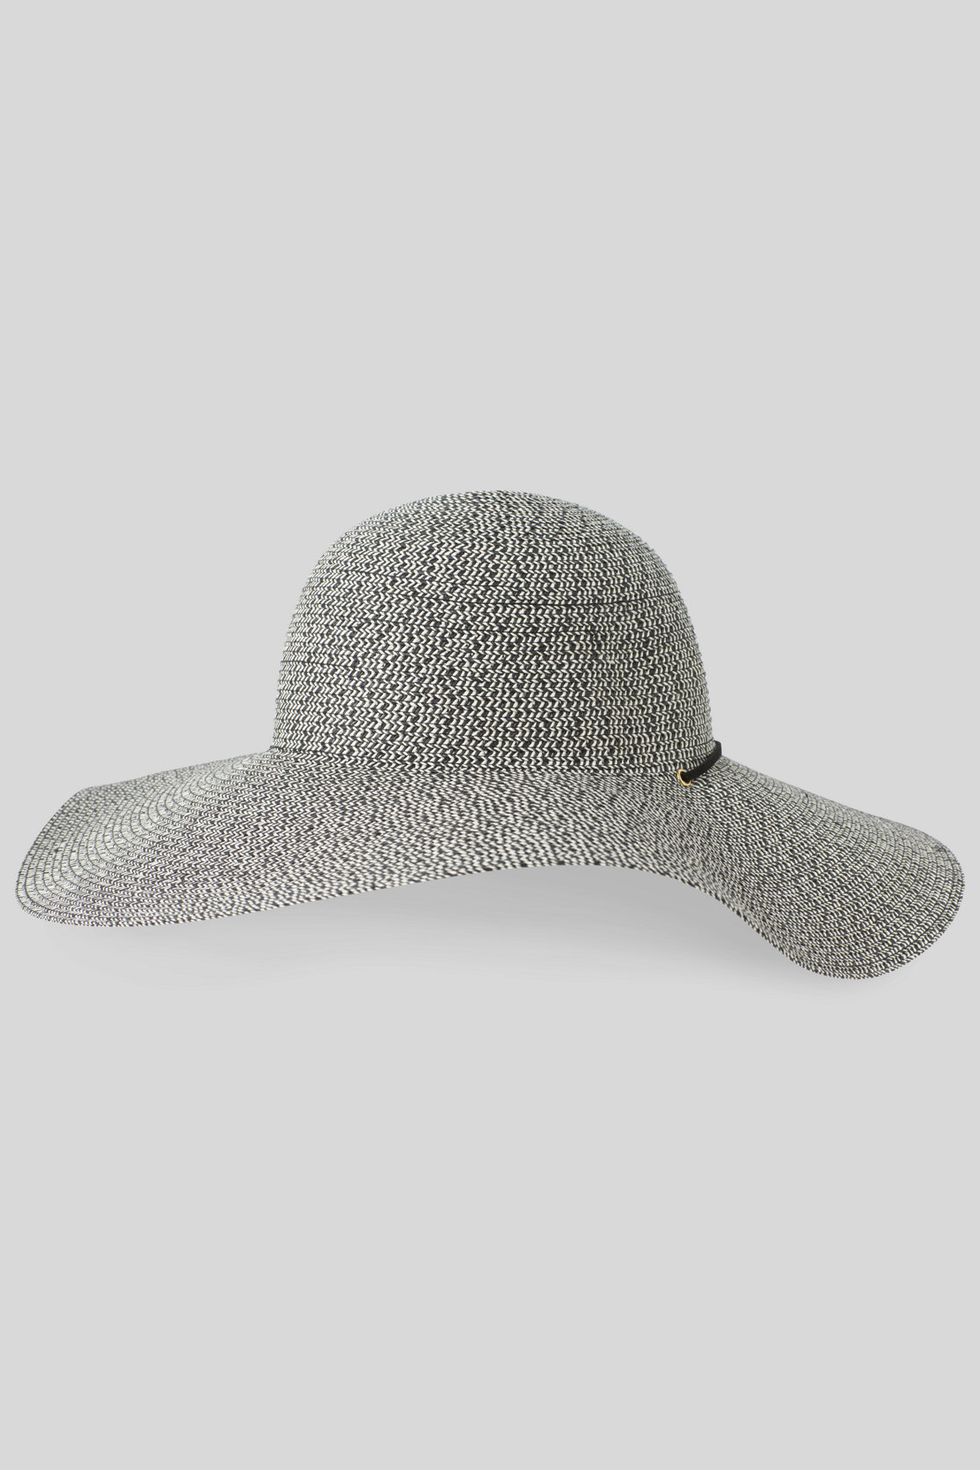 Summer Hats Women Fashion 2022